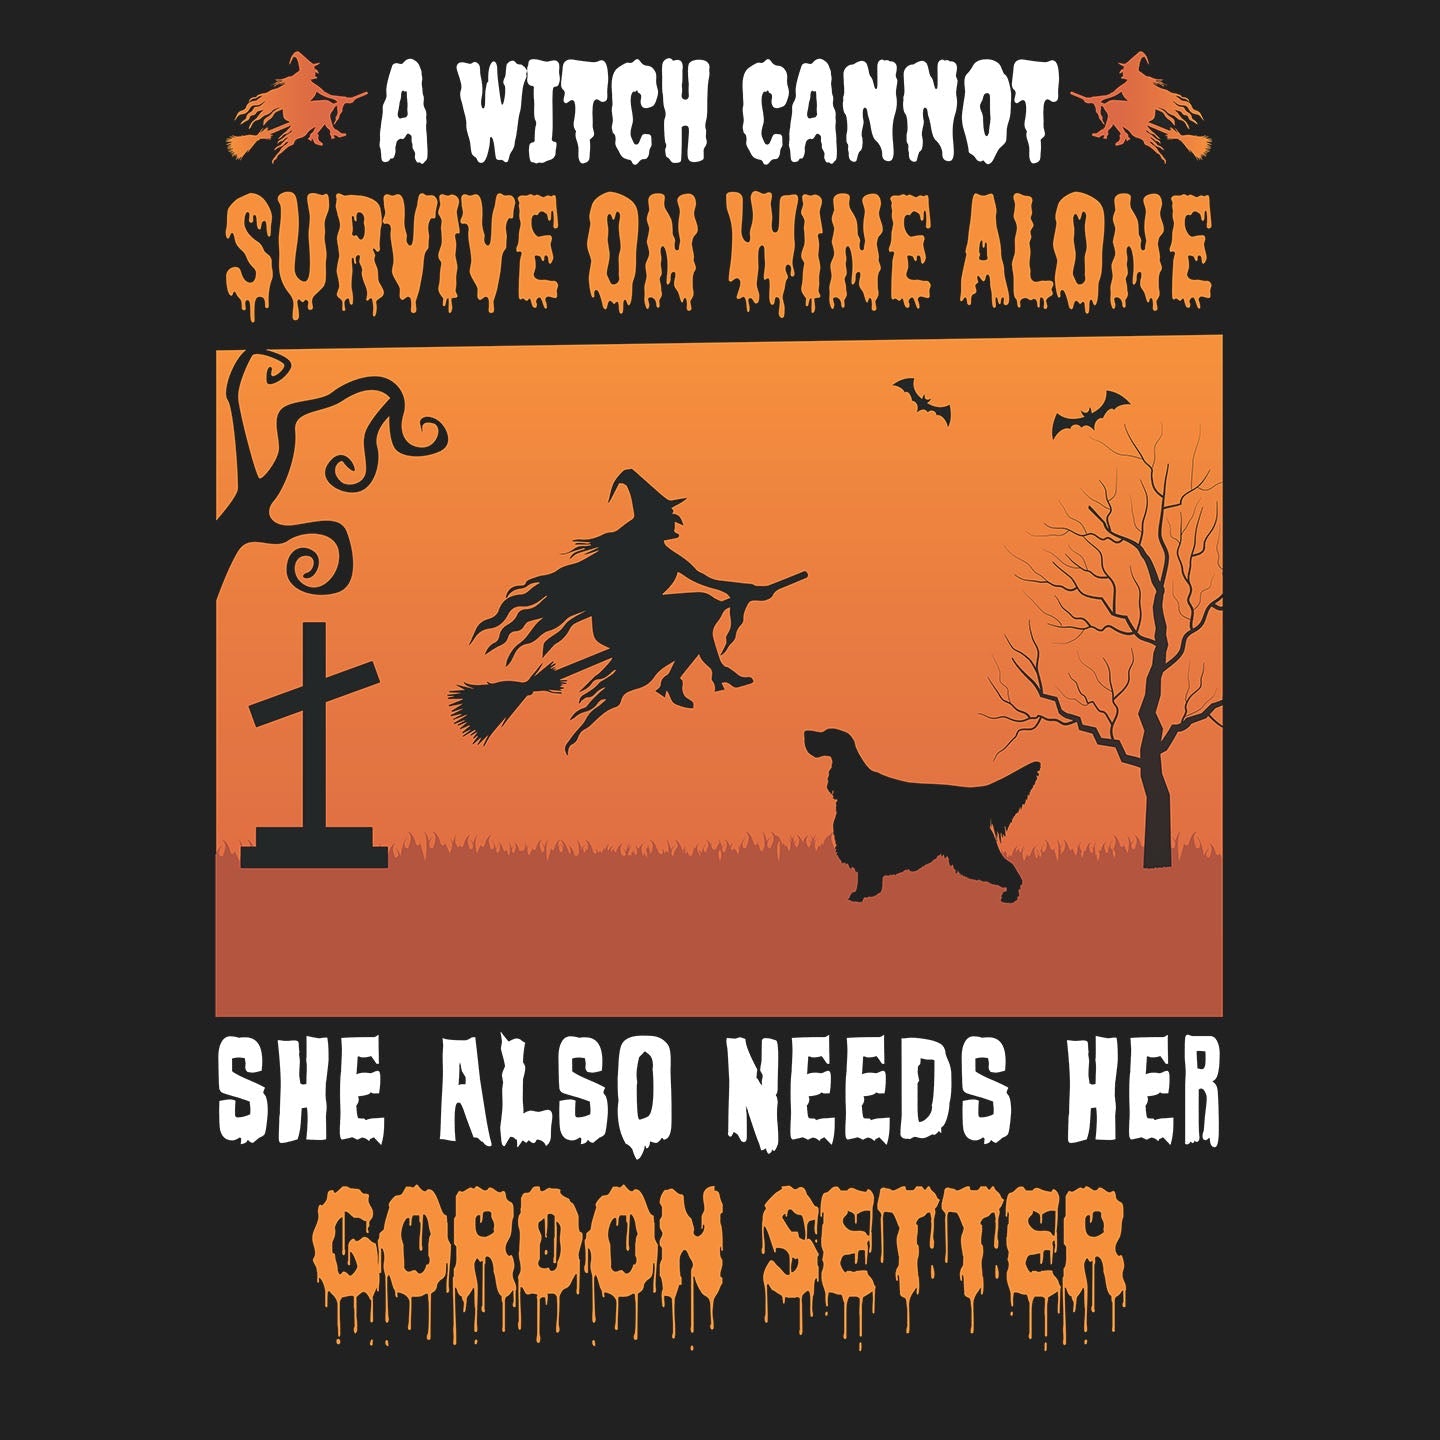 A Witch Needs Her Gordon Setter - Adult Unisex Crewneck Sweatshirt